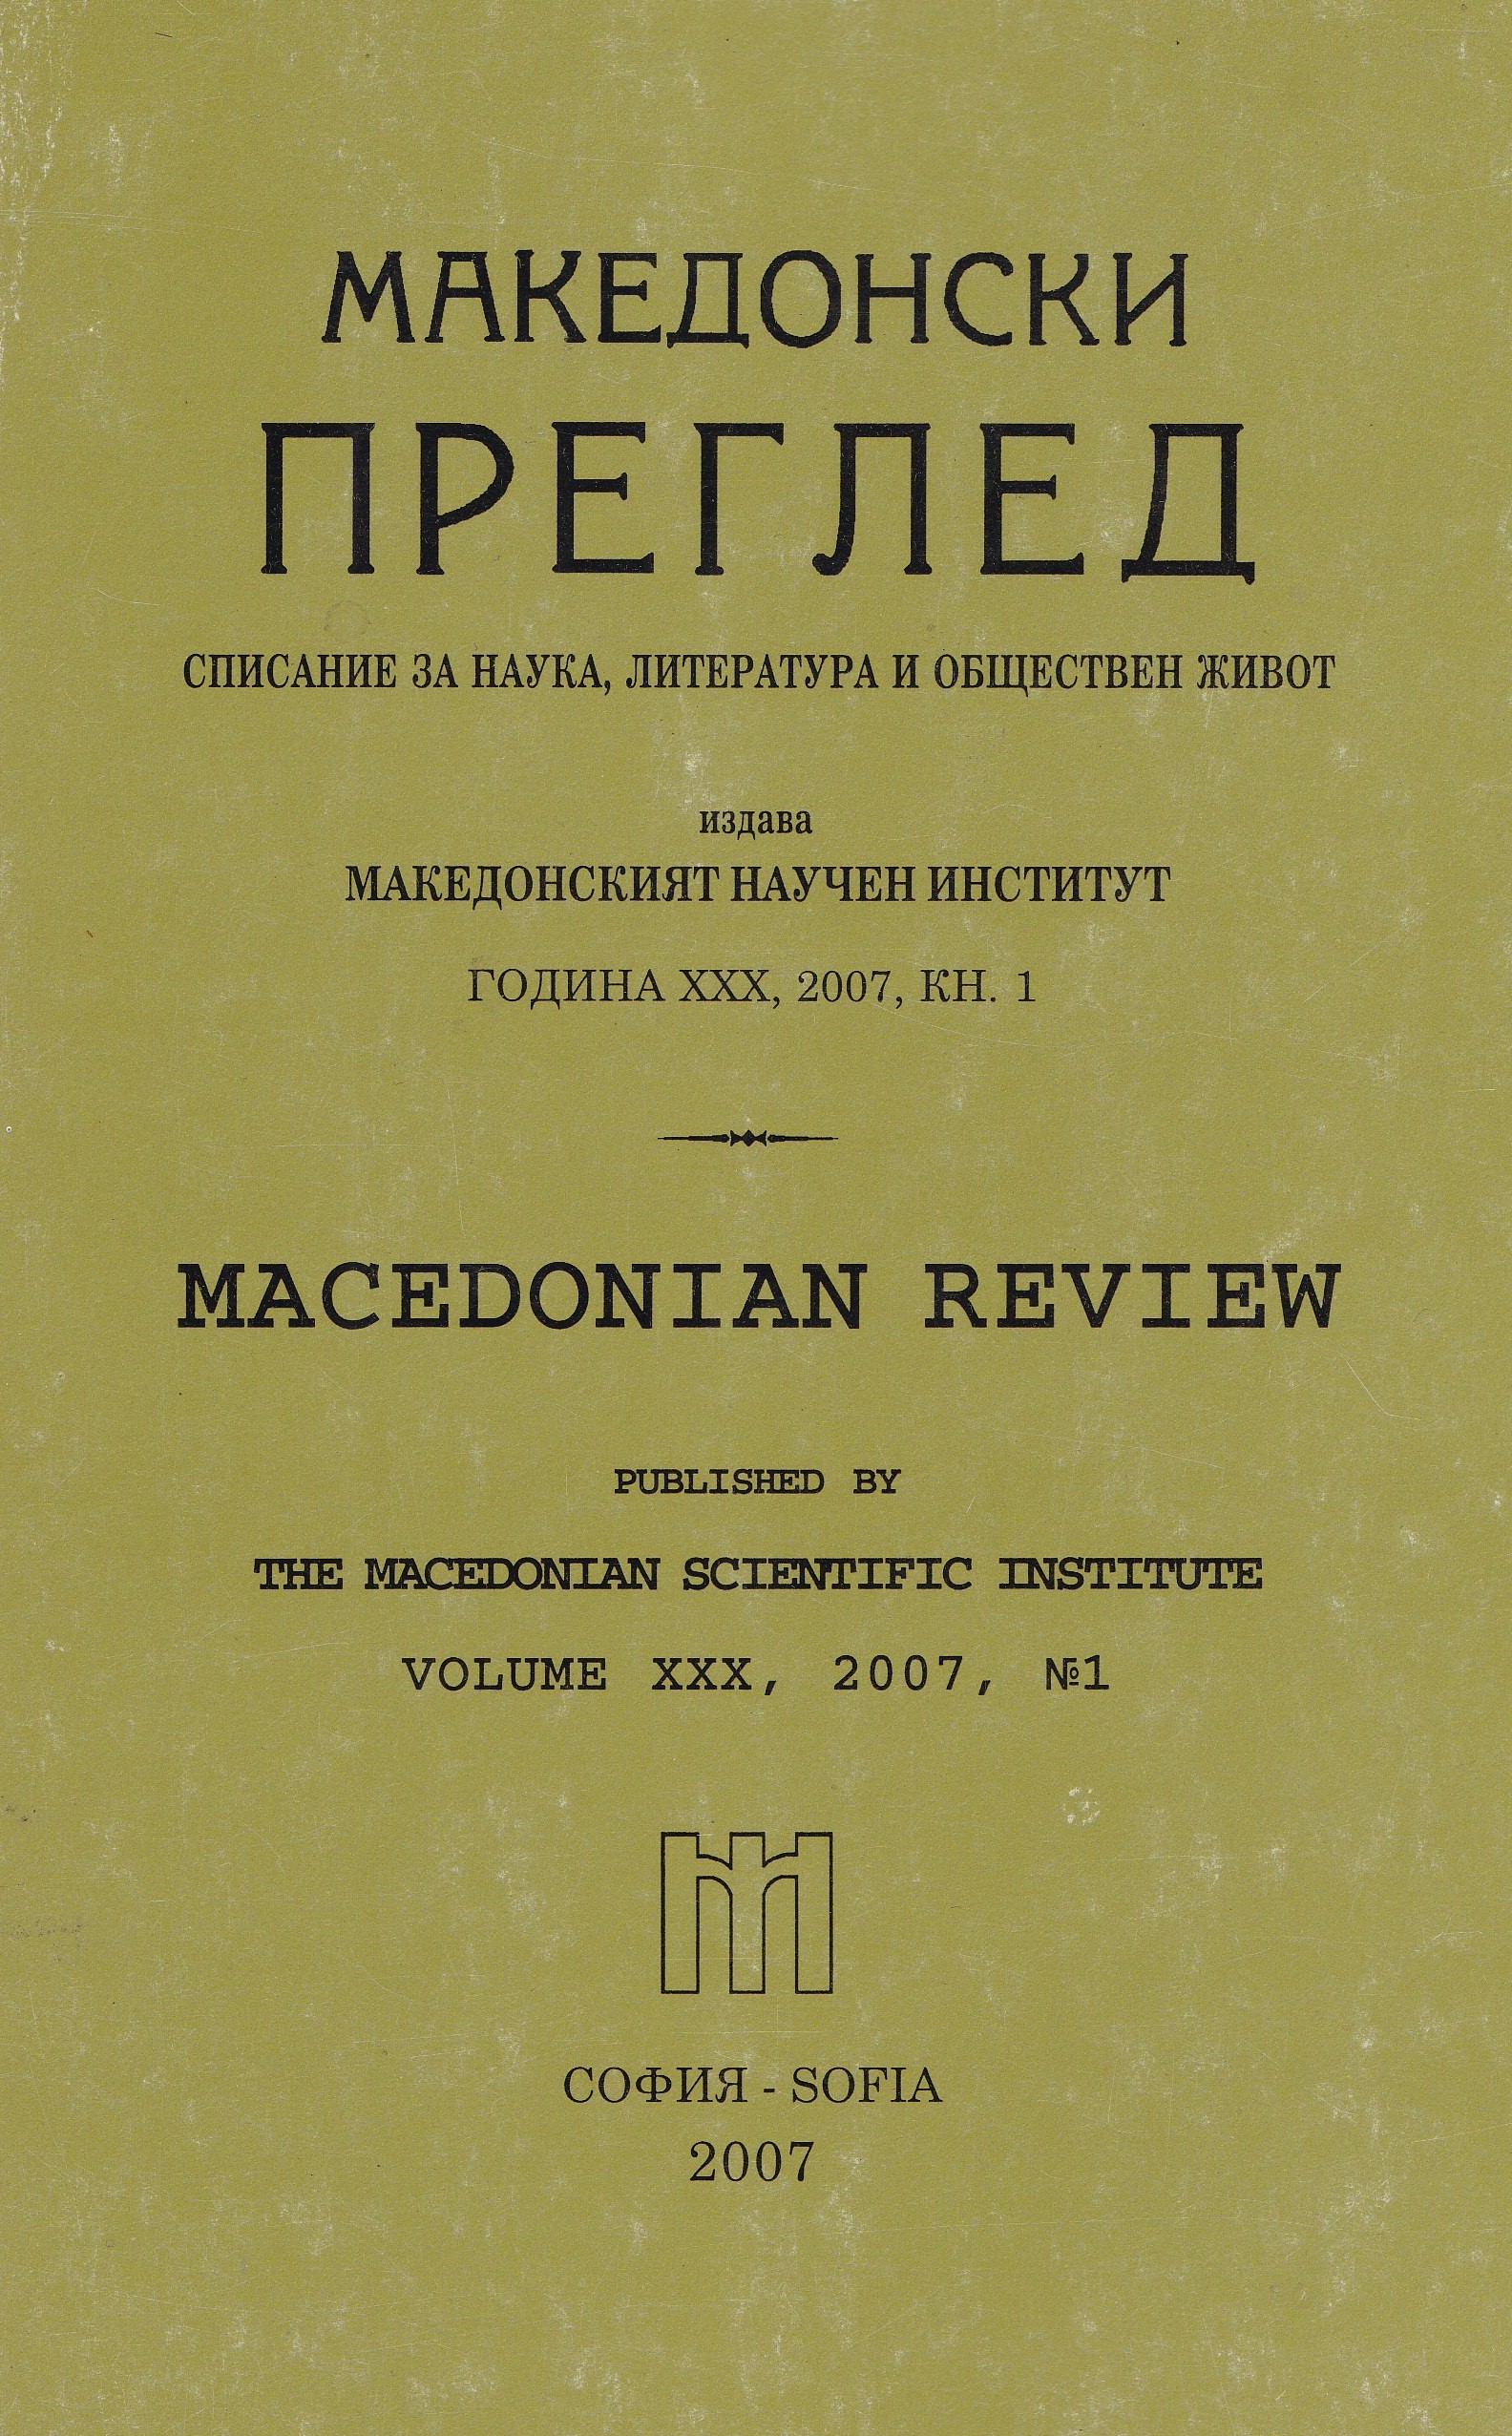 Returning to Macedonia Cover Image